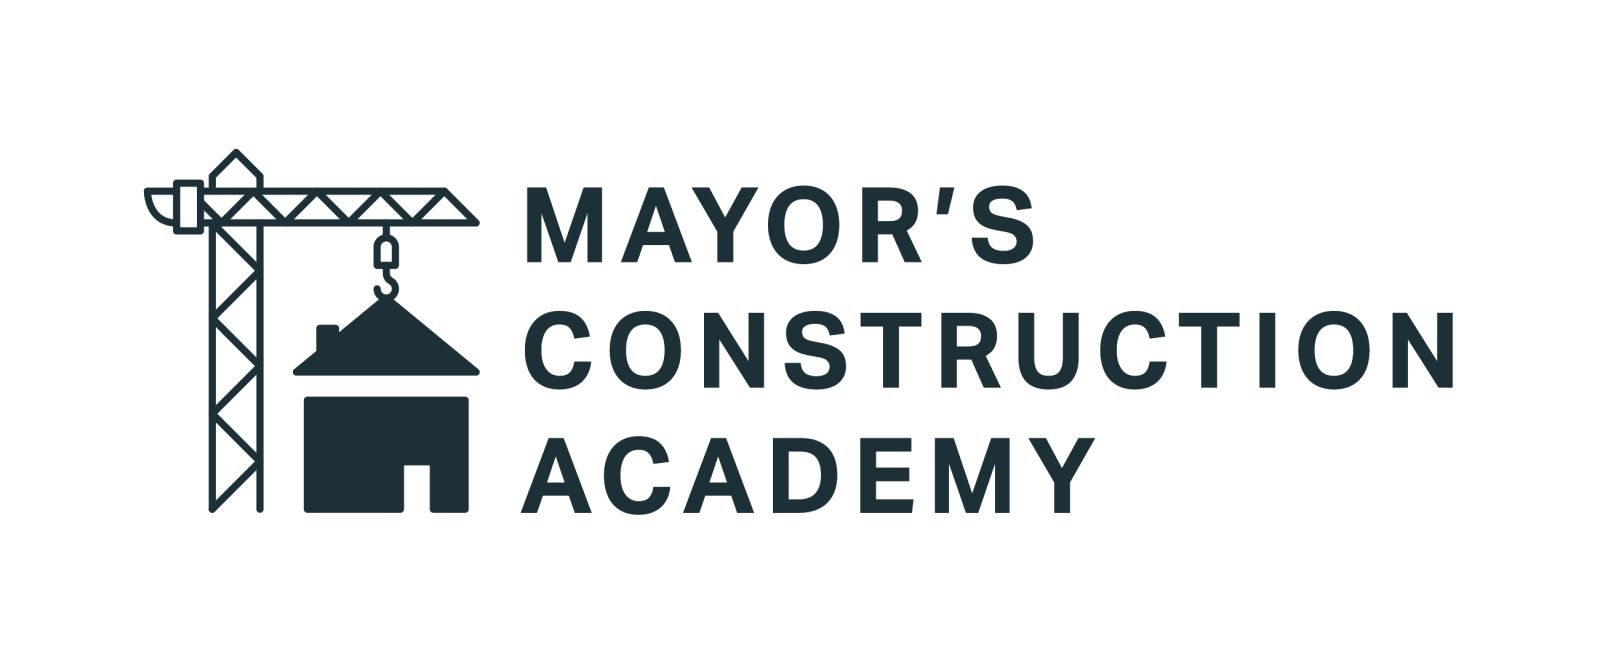 Mayors Construction Academy